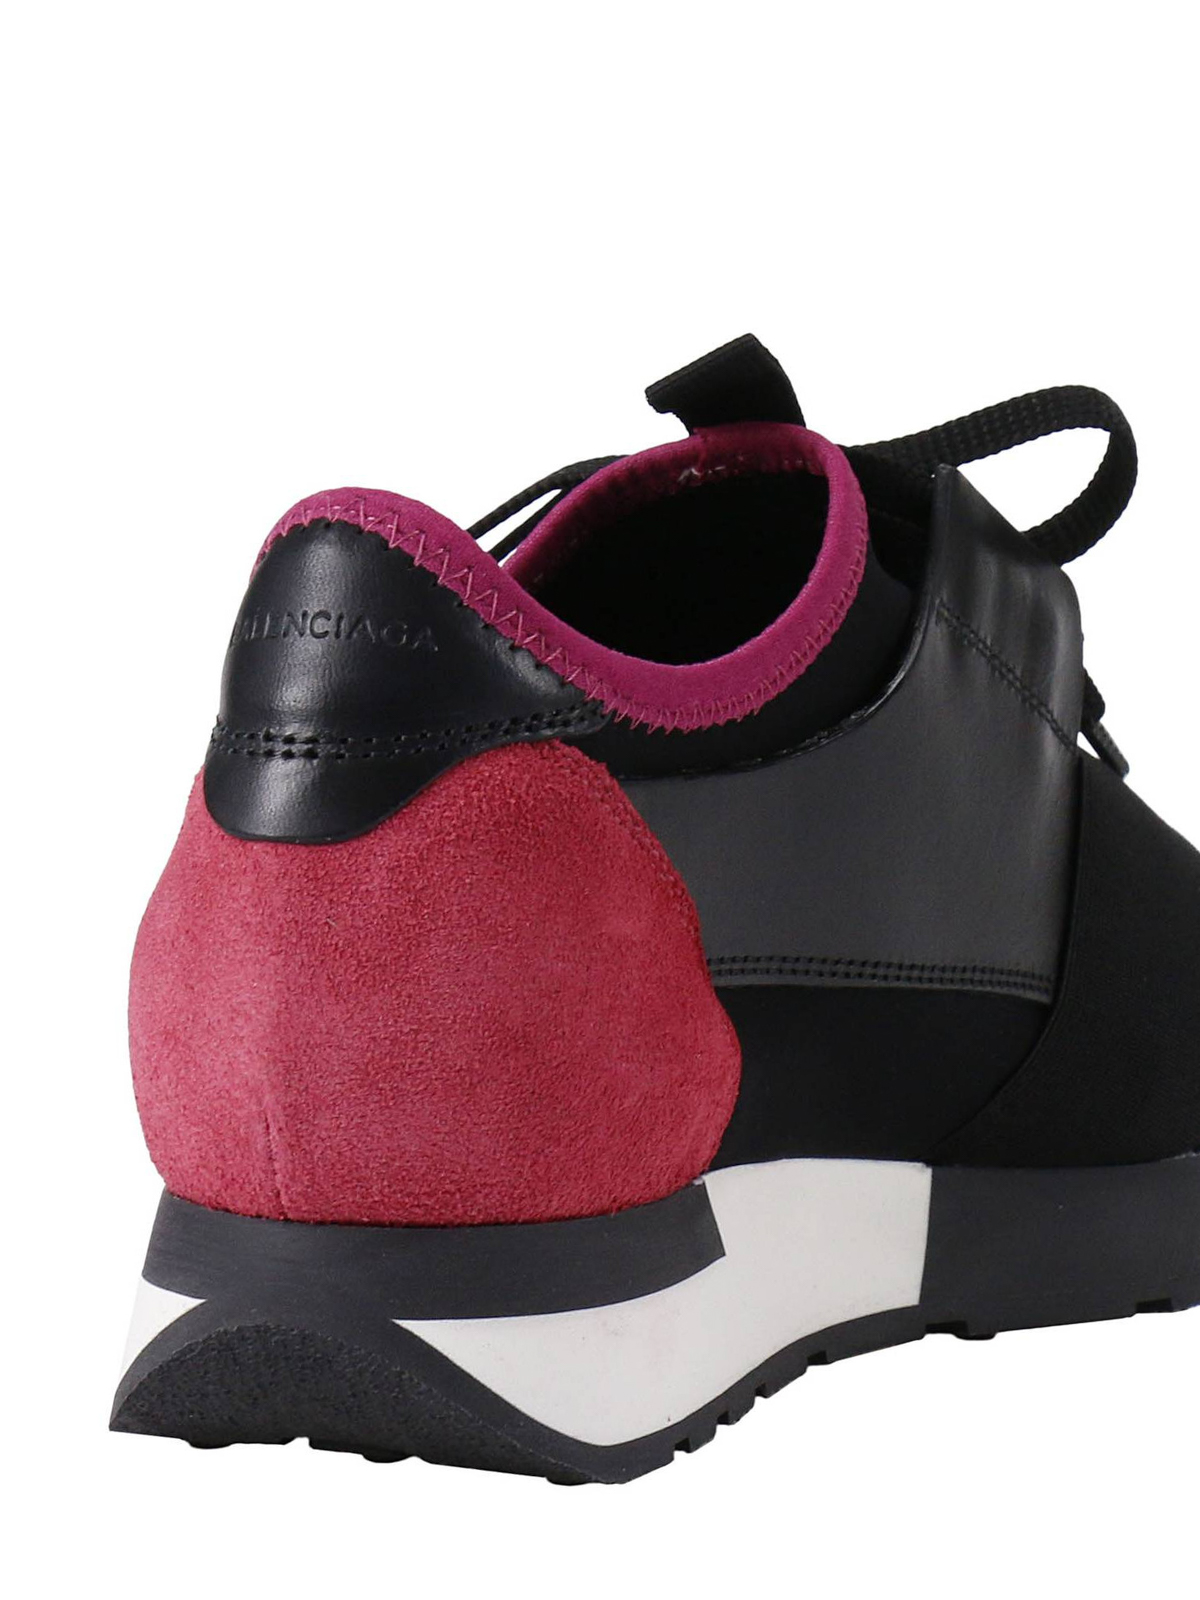 BALENCIAGA Sneakers Women  Runner sneakers Multicolor  BALENCIAGA 677402  W3RB68123  Leam Luxury Shopping Online